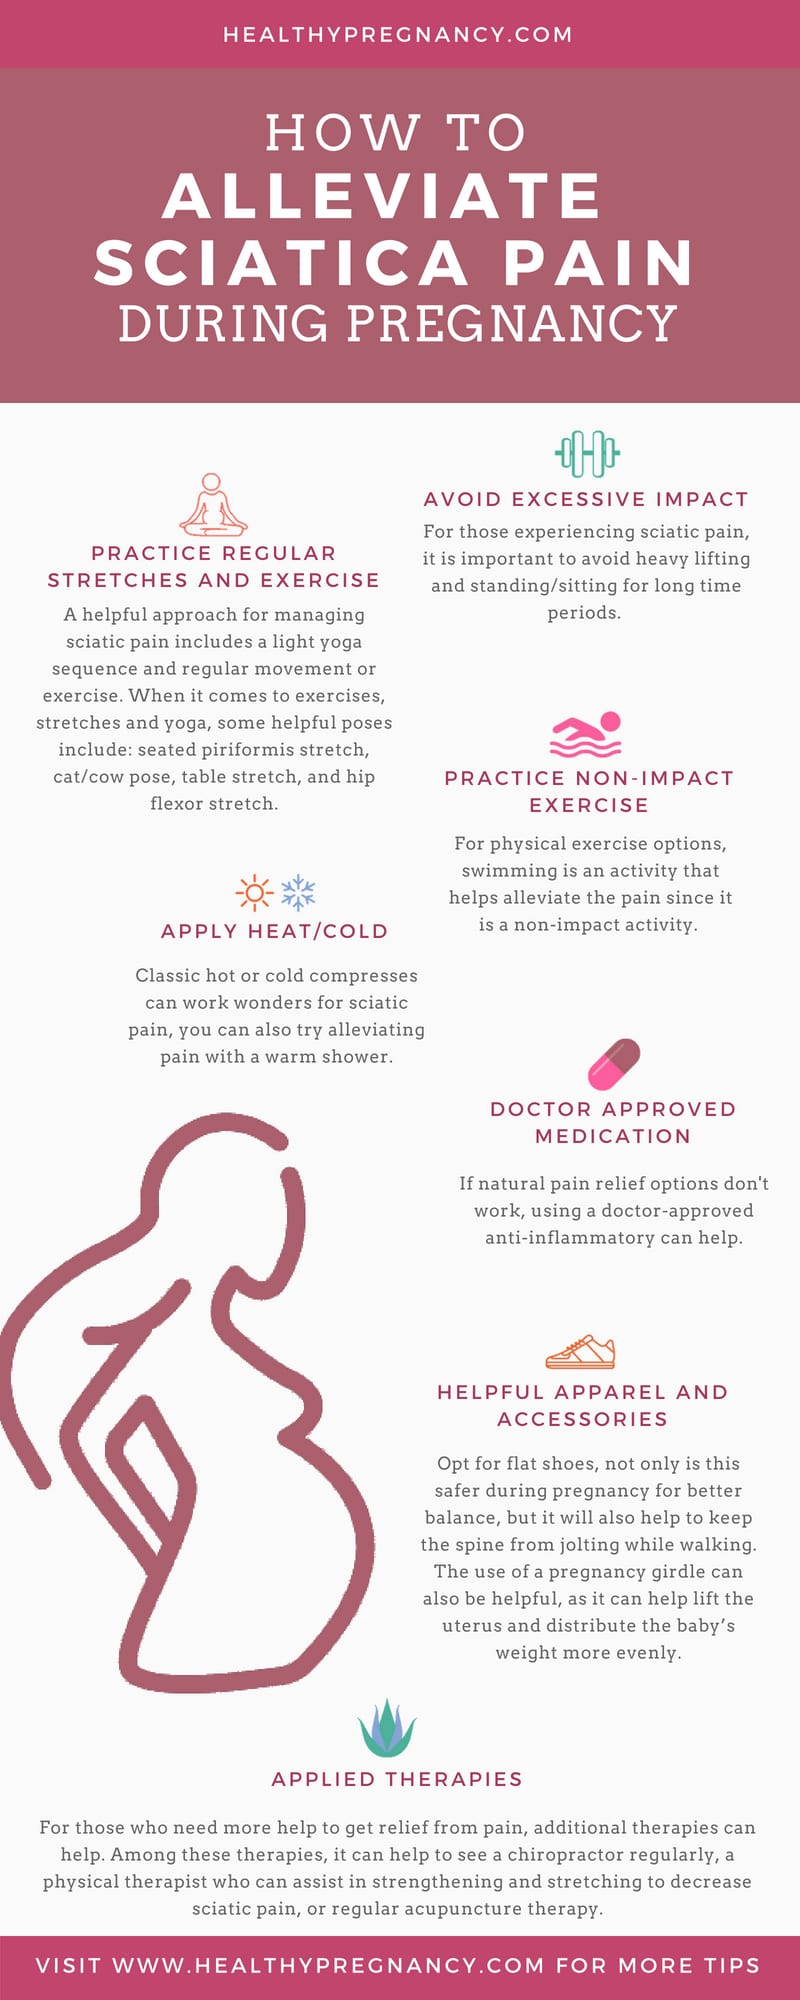 https://www.healthypregnancy.com/wp-content/uploads/2018/06/how-to-alleviate-sciatica-pain-during-pregnancy-4.jpg